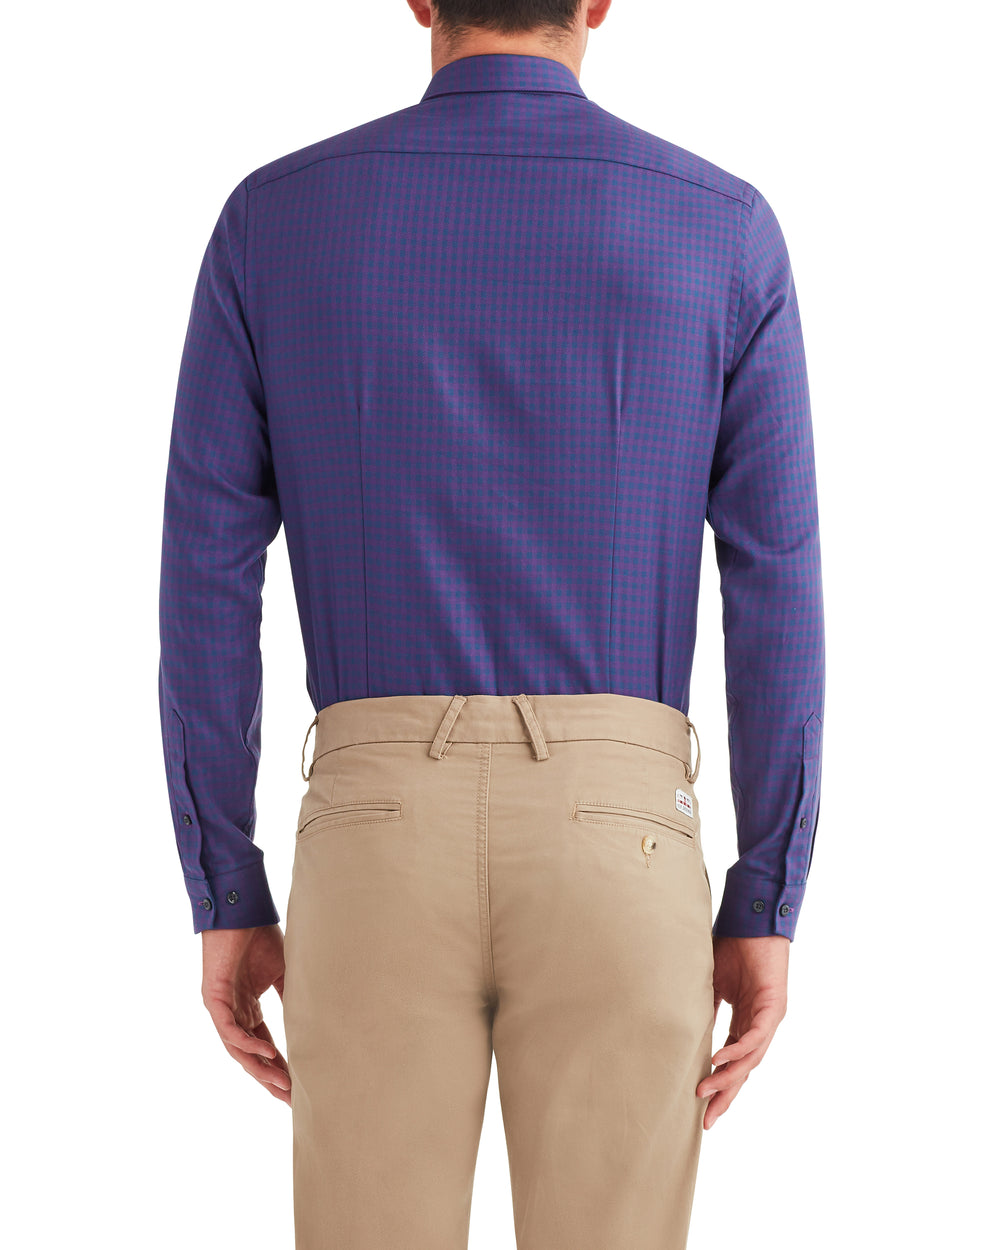 Twill Gingham Slim Fit Dress Shirt - Purple